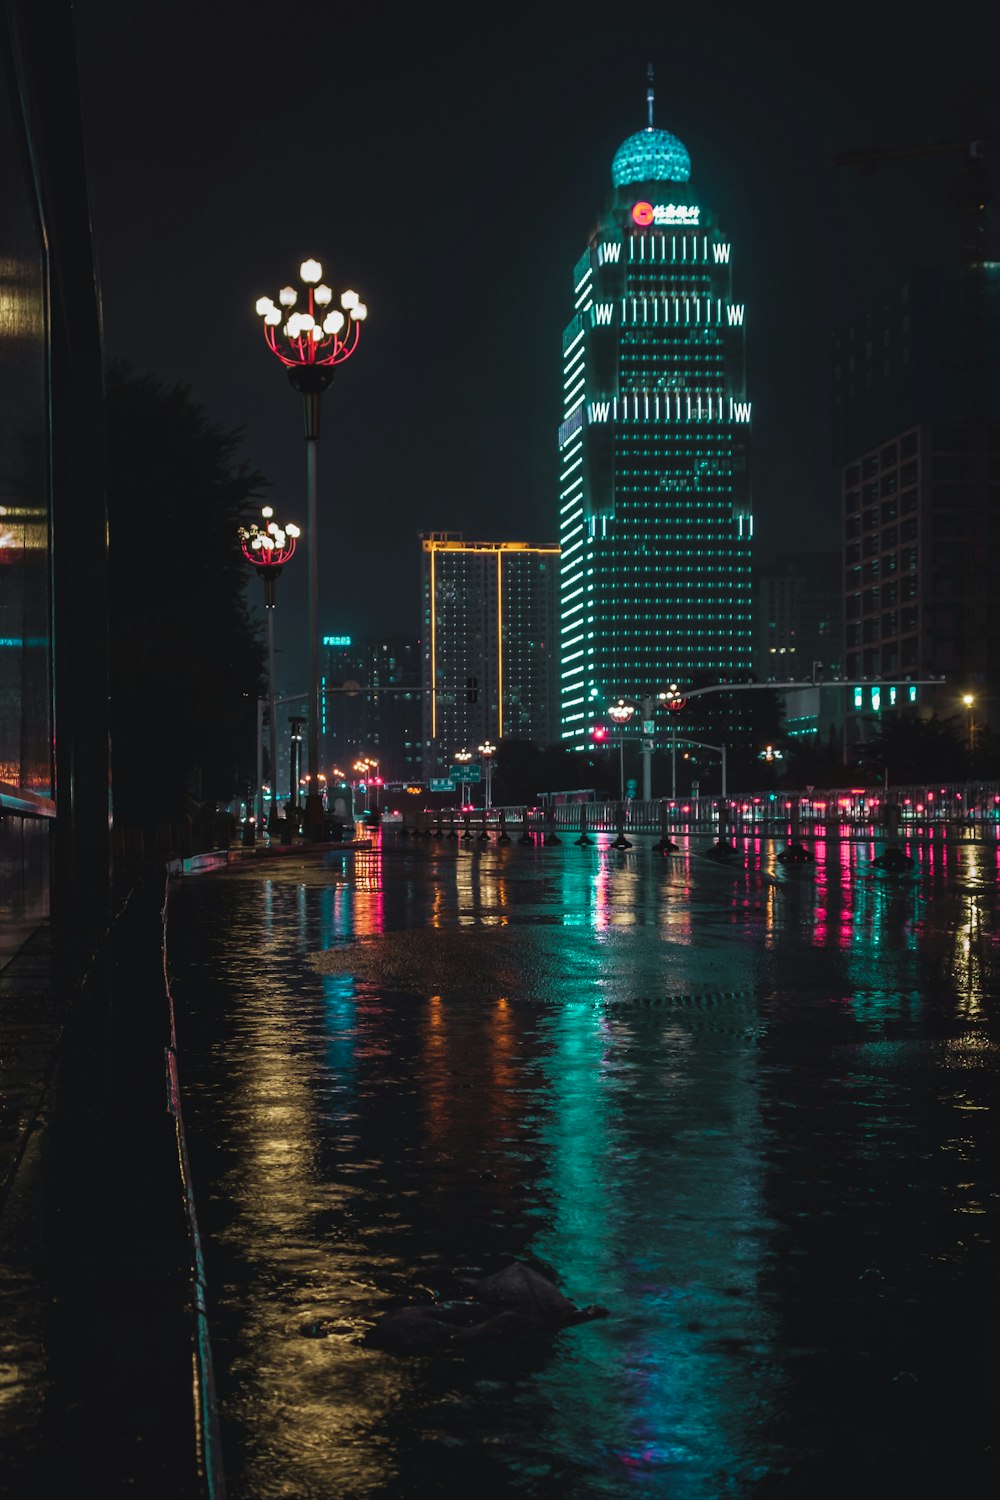 city street during rainy nighttime